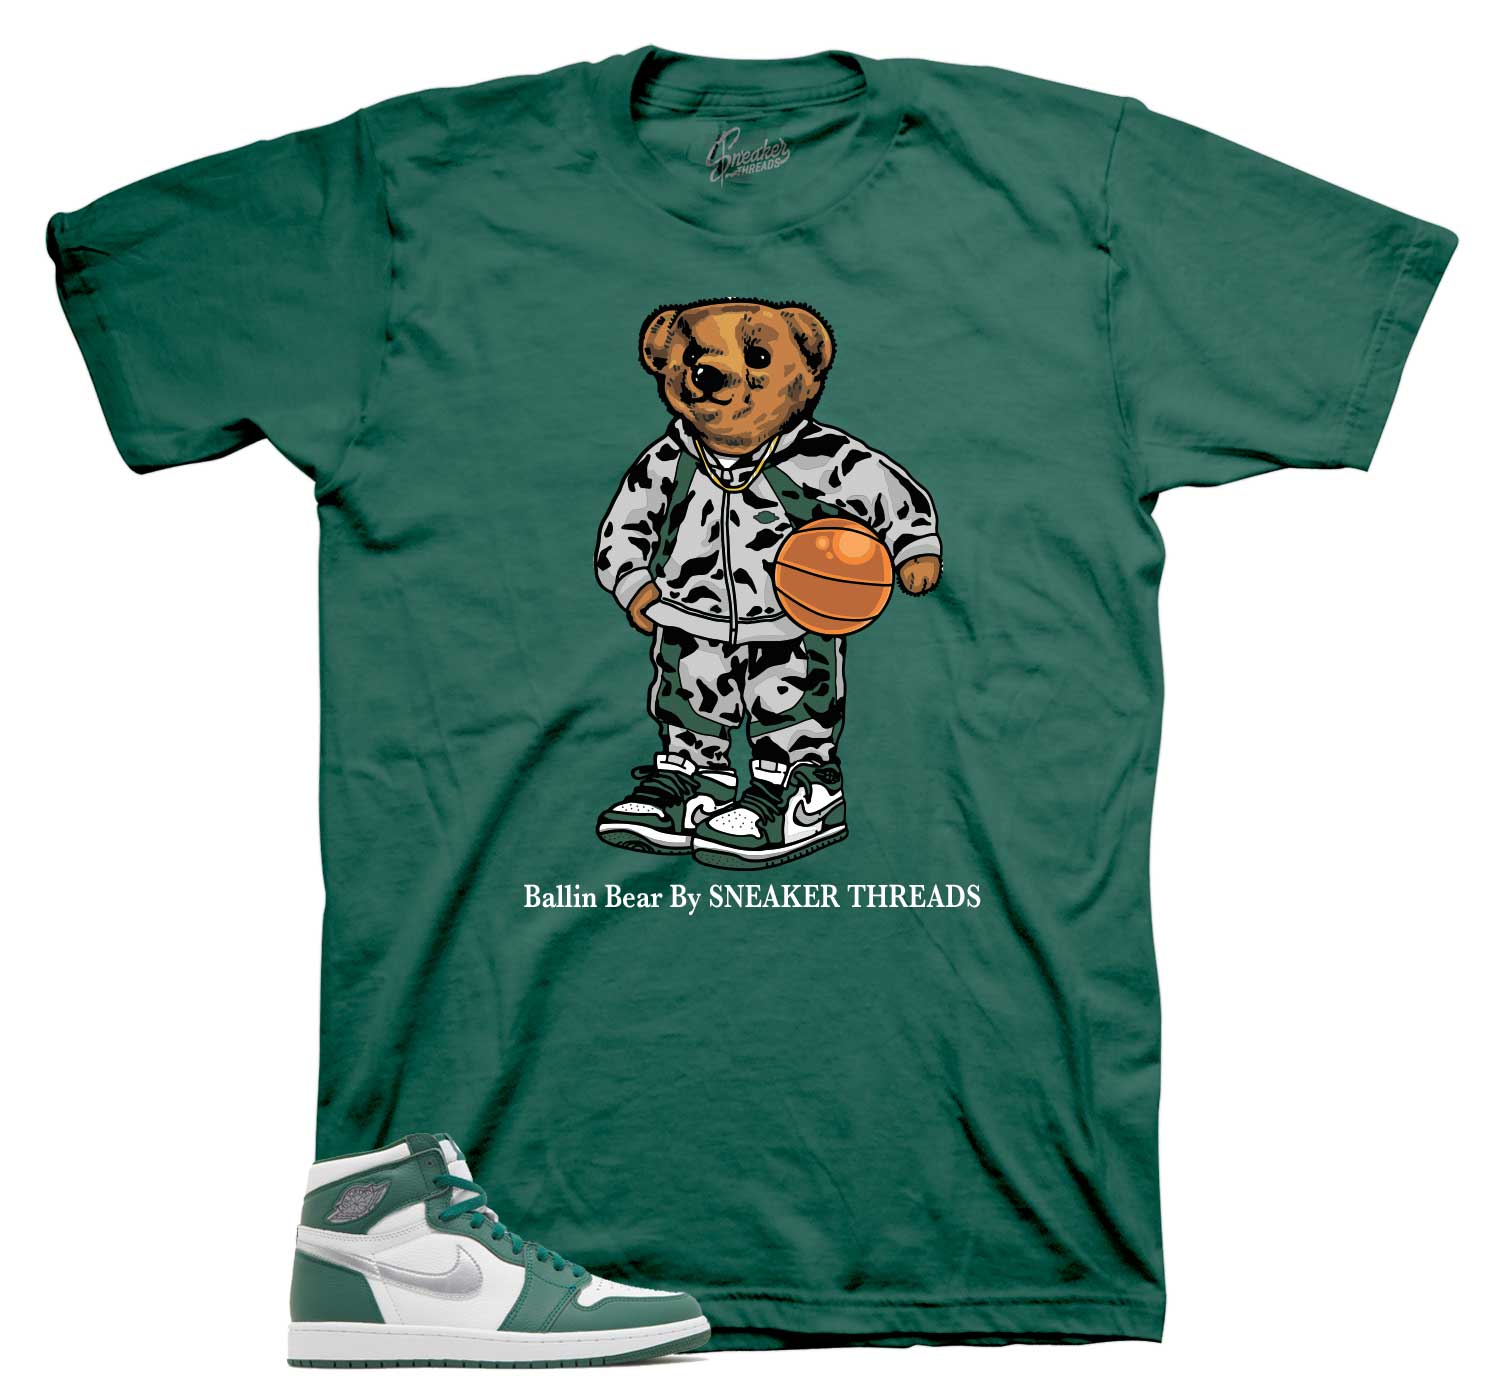 Retro 1 Gorge Green Shirt - Ballin Bear - Green